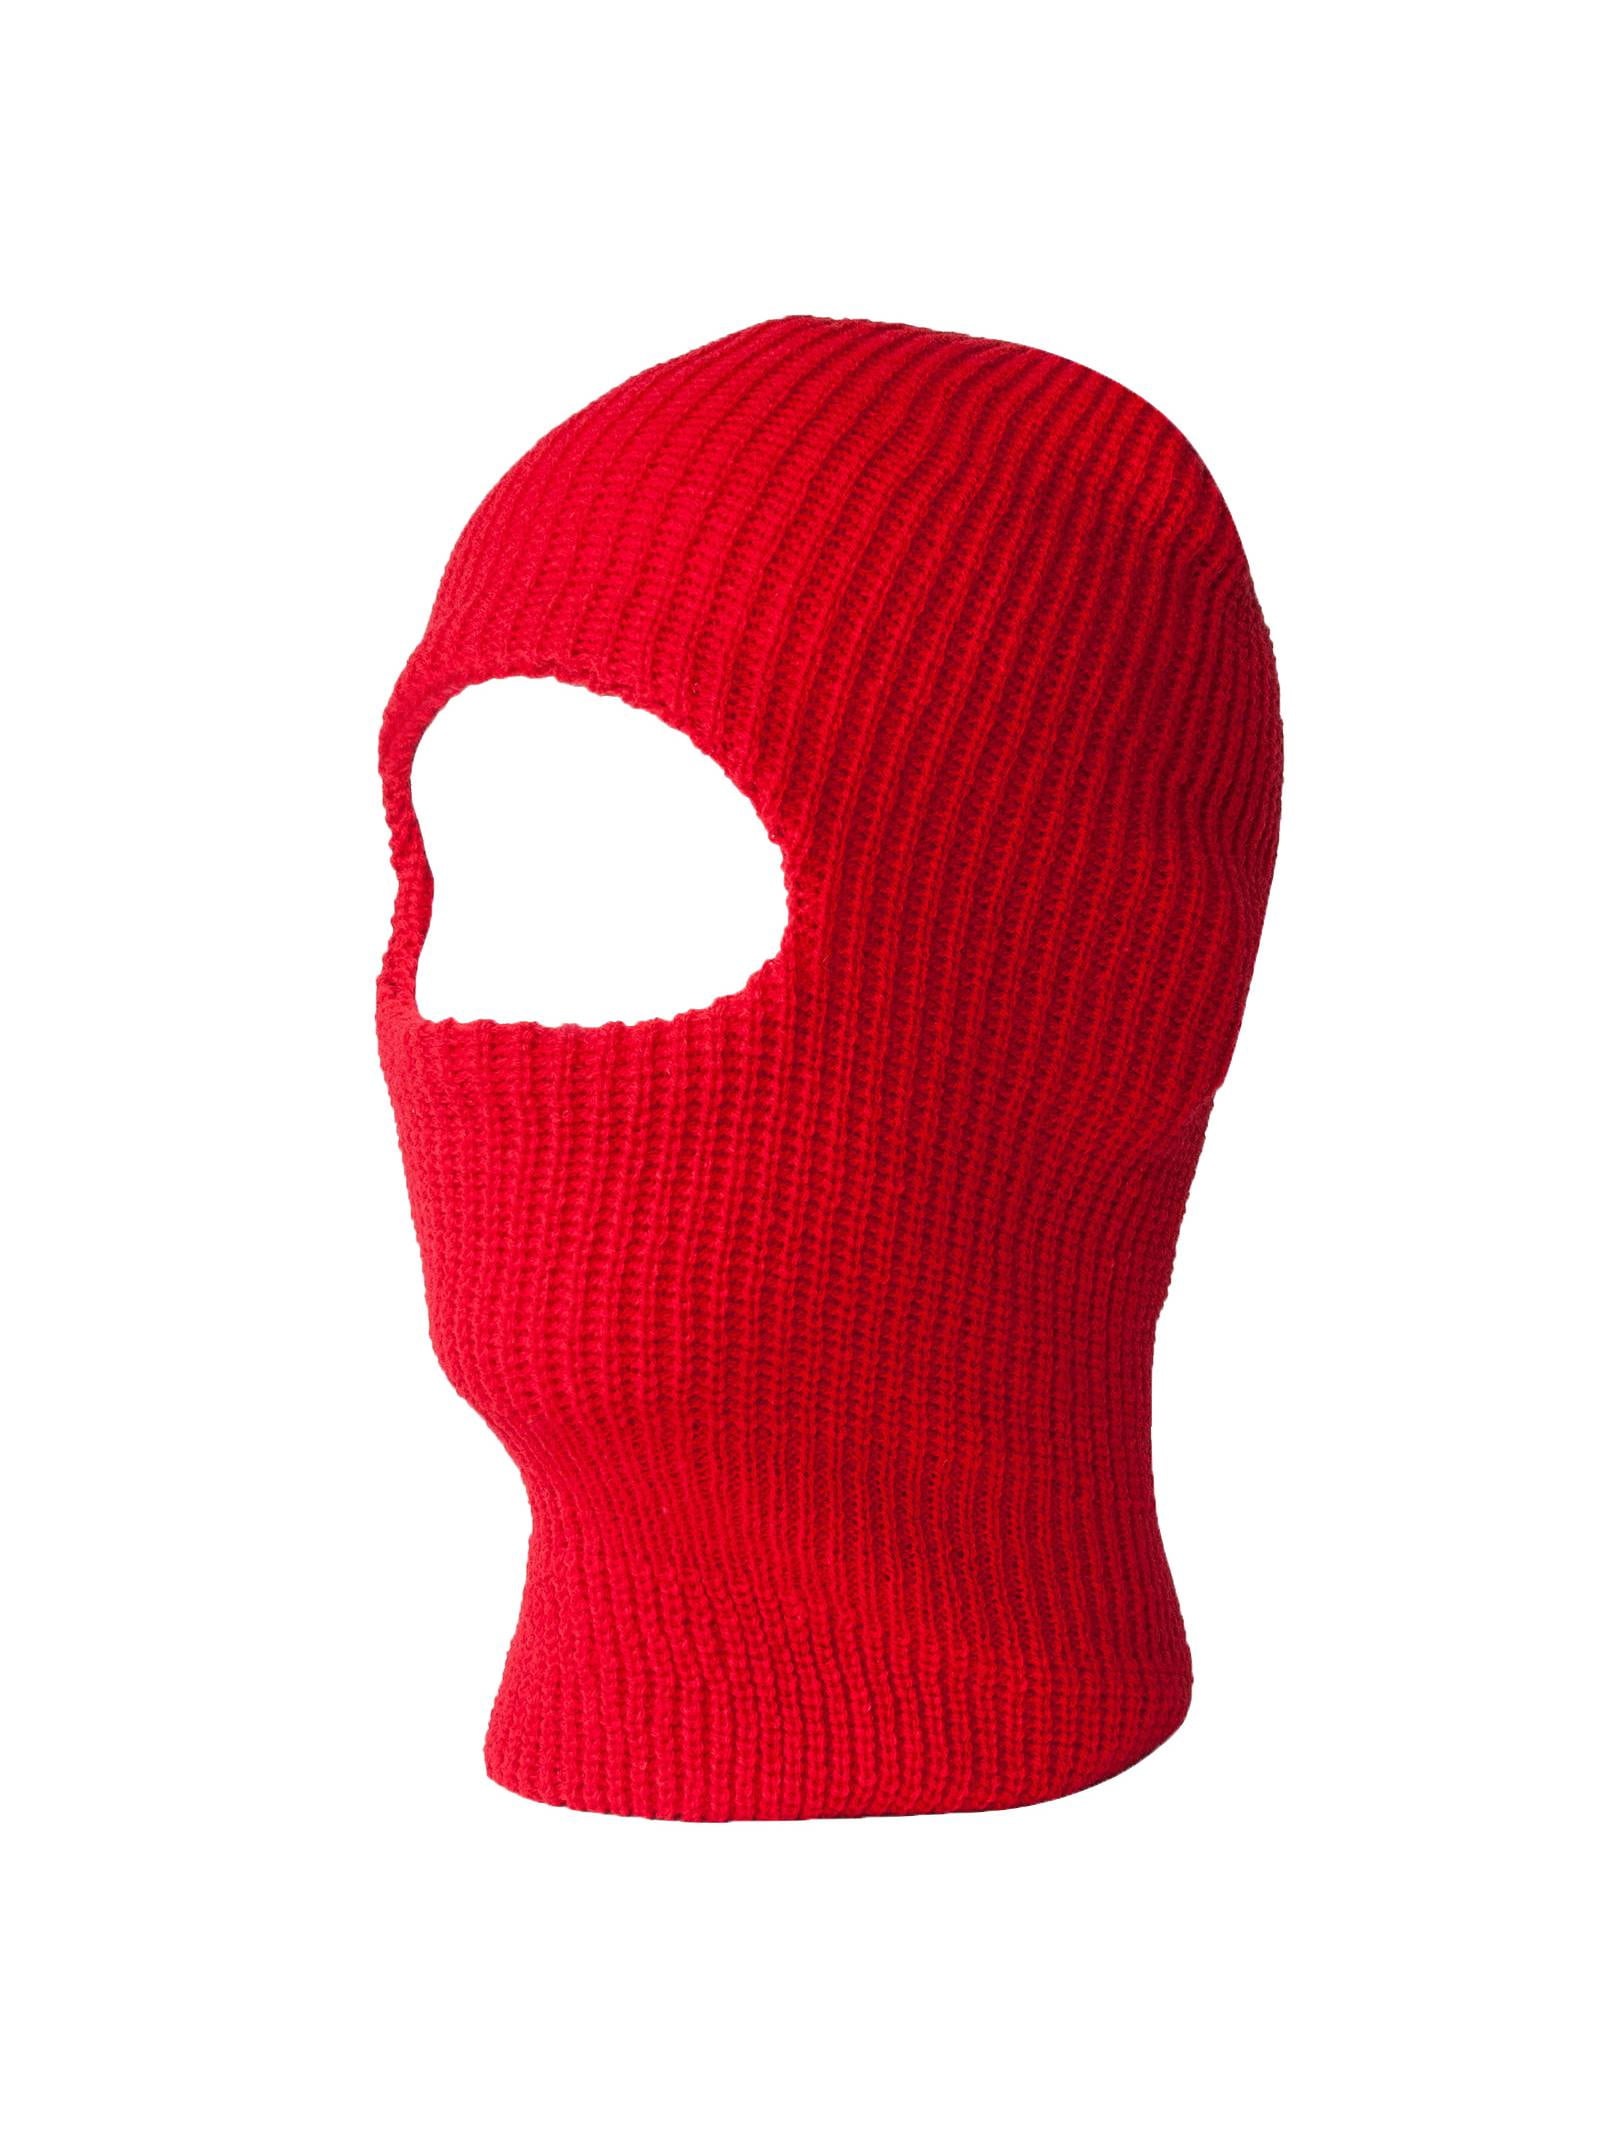 Red Hole Mask - Walmart.com